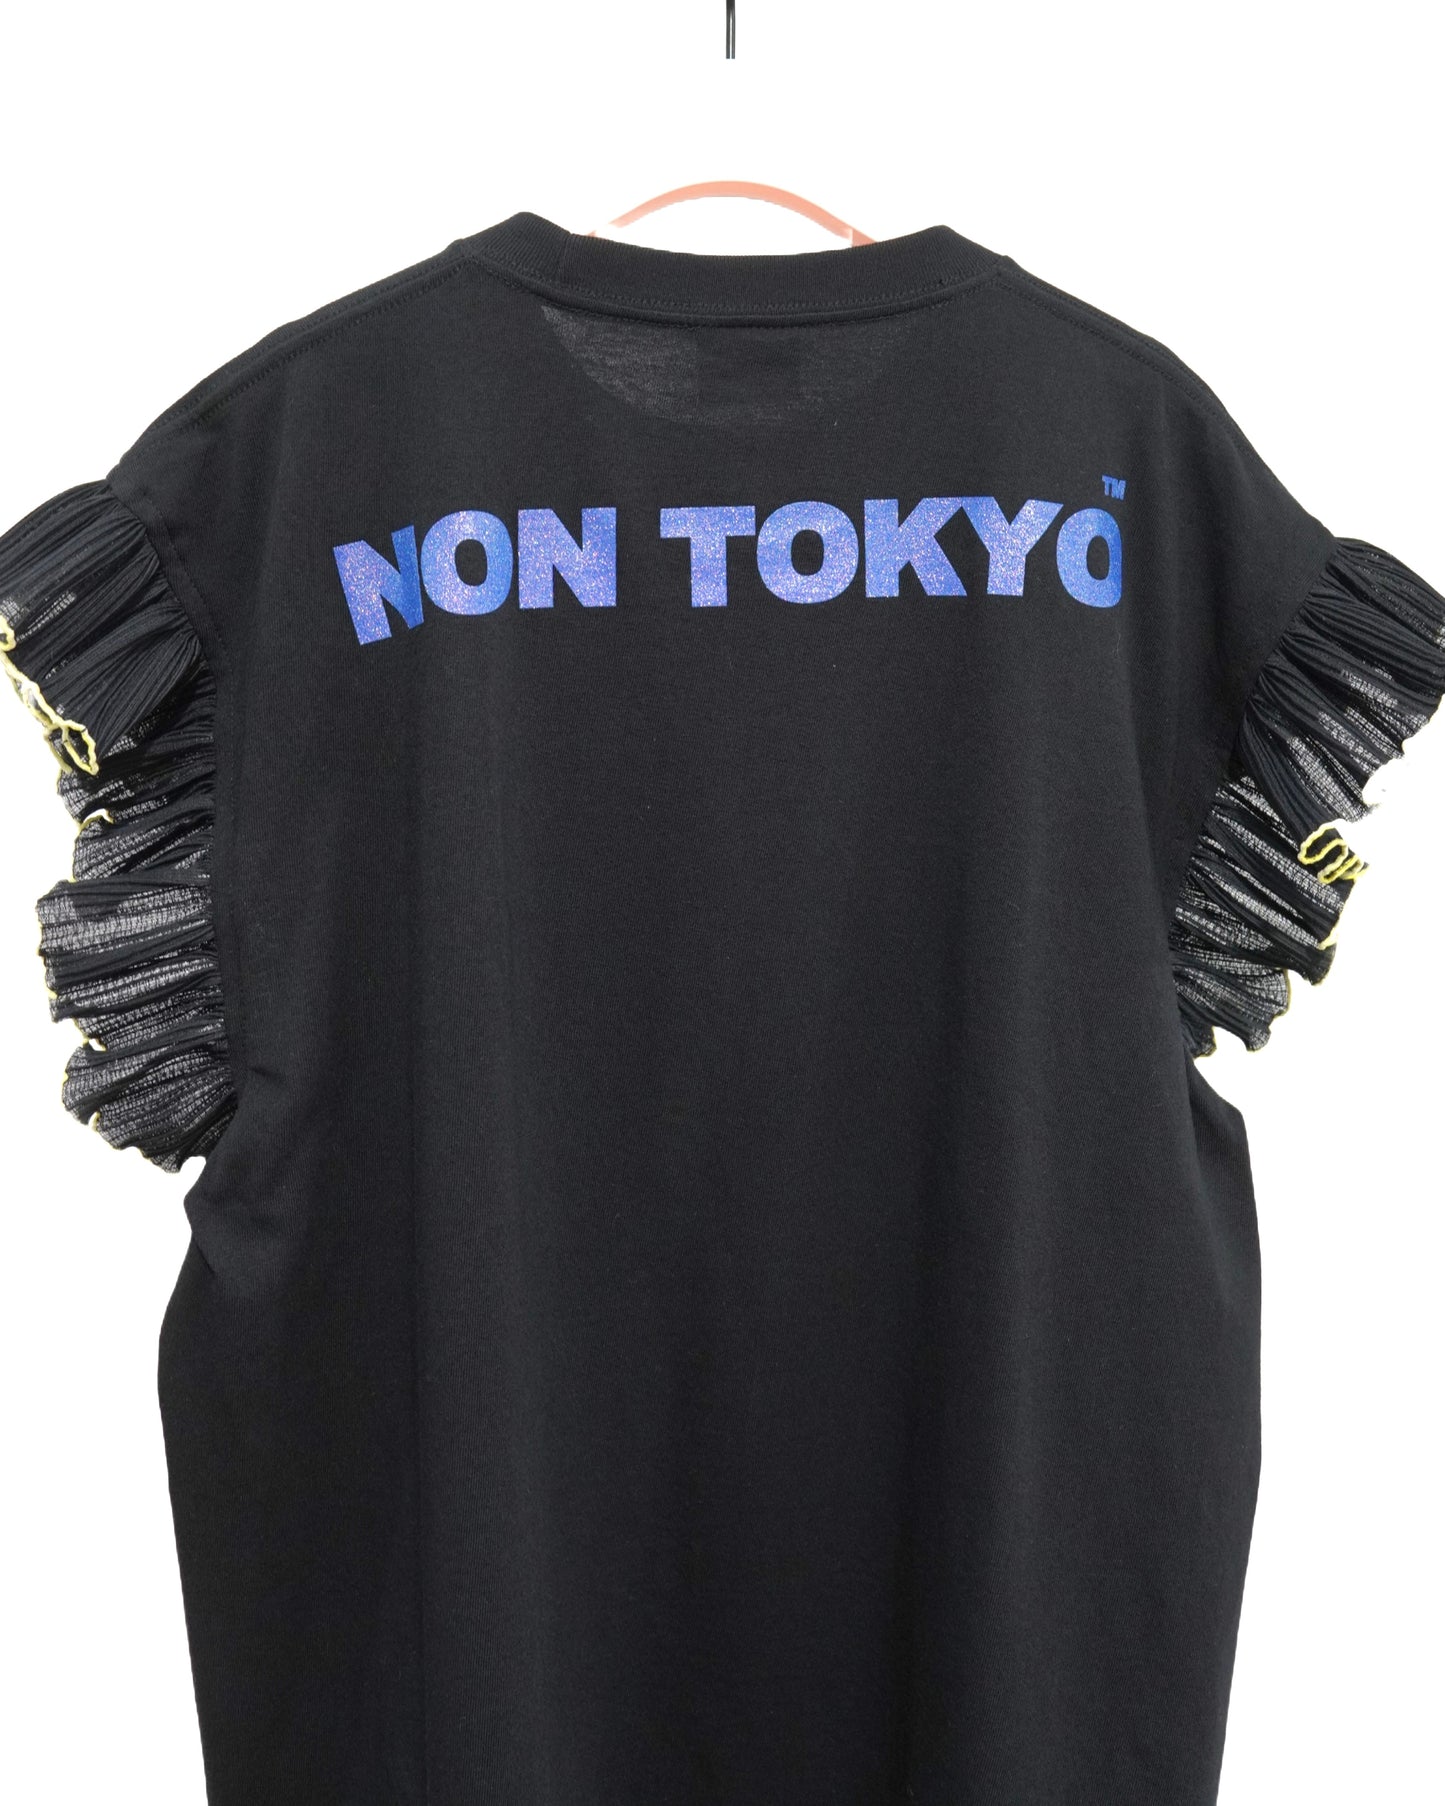 NON TOKYO /  FRILL SLEEVE T-SHIRT (BLACK) / 〈ノントーキョー〉フリルスリーブTシャツ (ブラック)